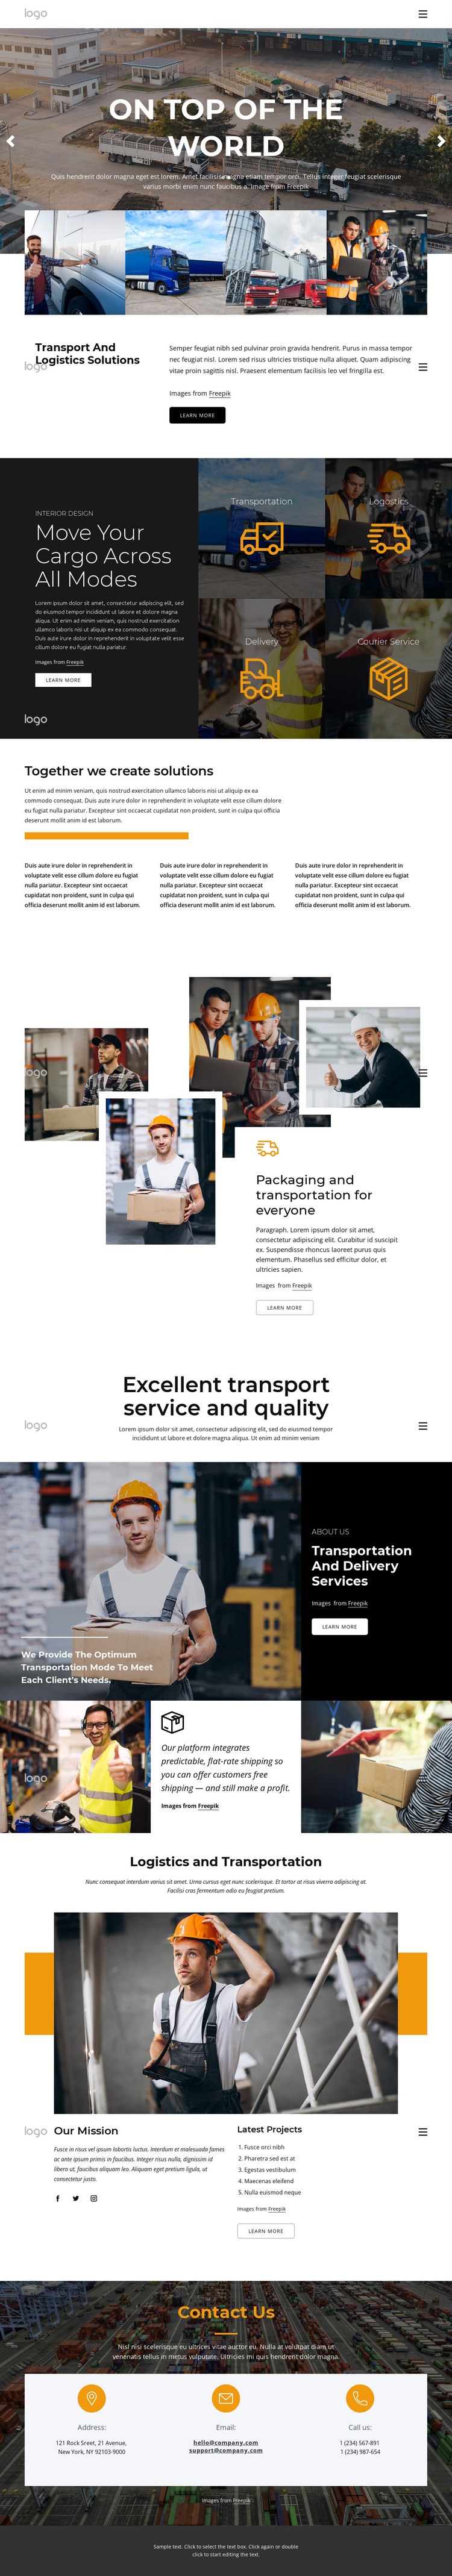 Transportation and logistics management Homepage Design